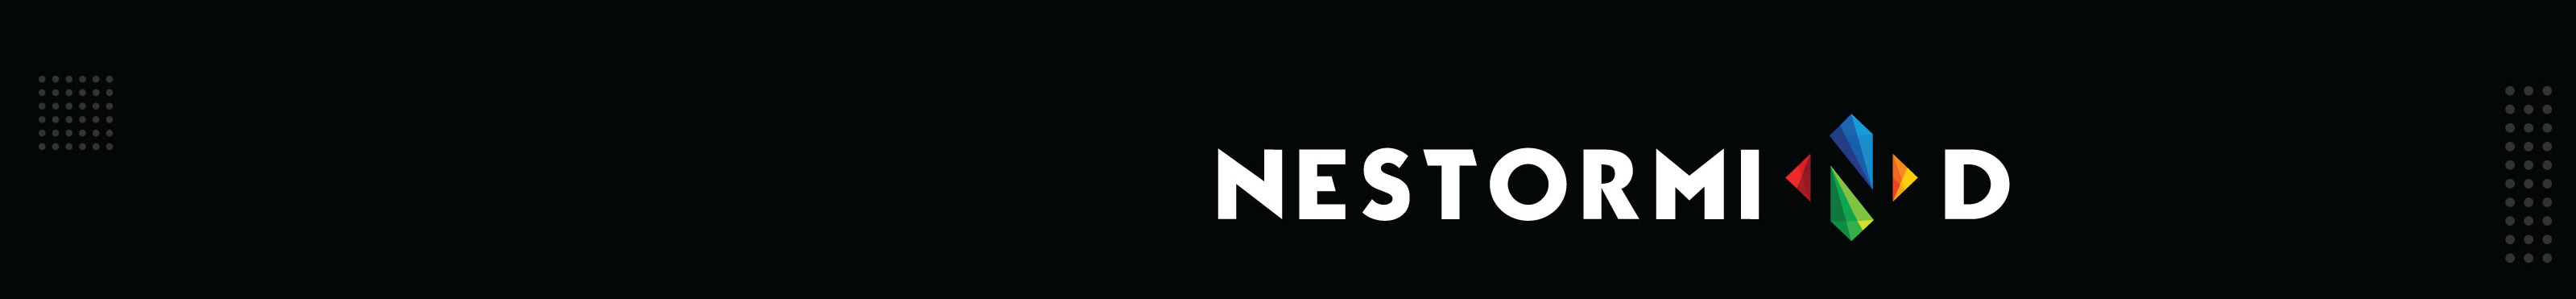 Nestormind (Pvt) Ltd.'s profile banner